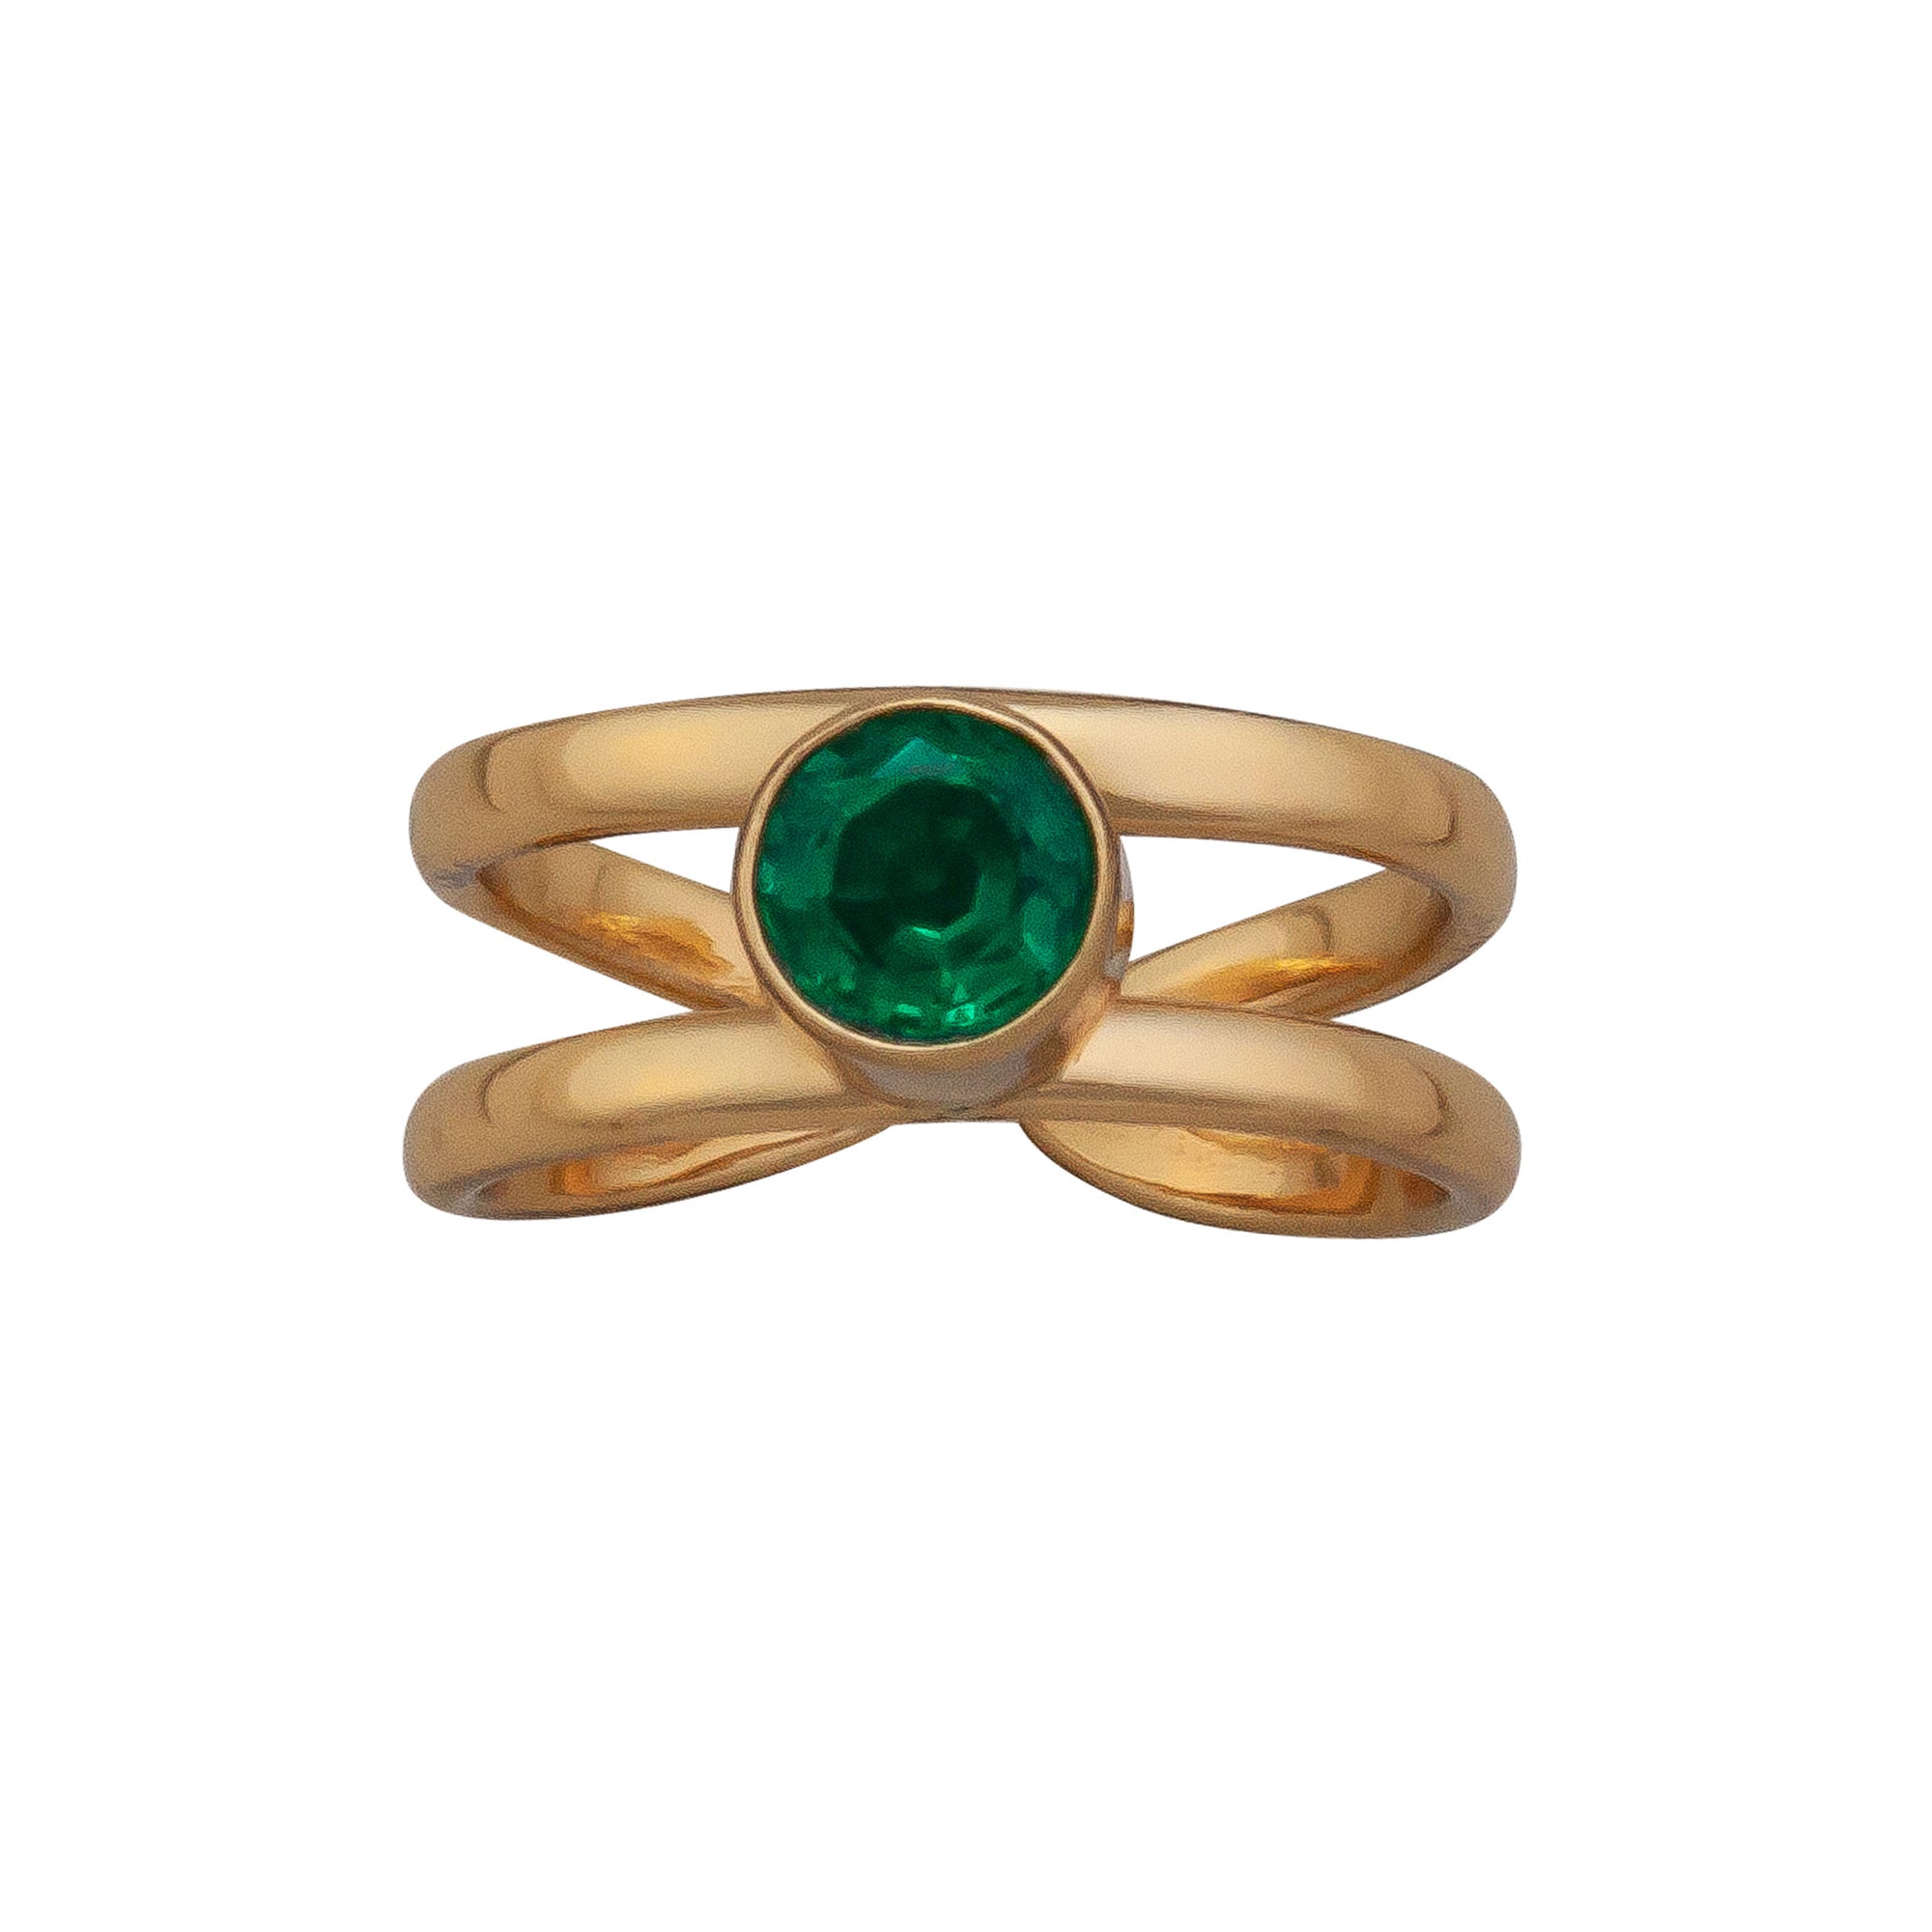 Alchemia Lab Emerald Cuff Ring | Charles Albert Jewelry